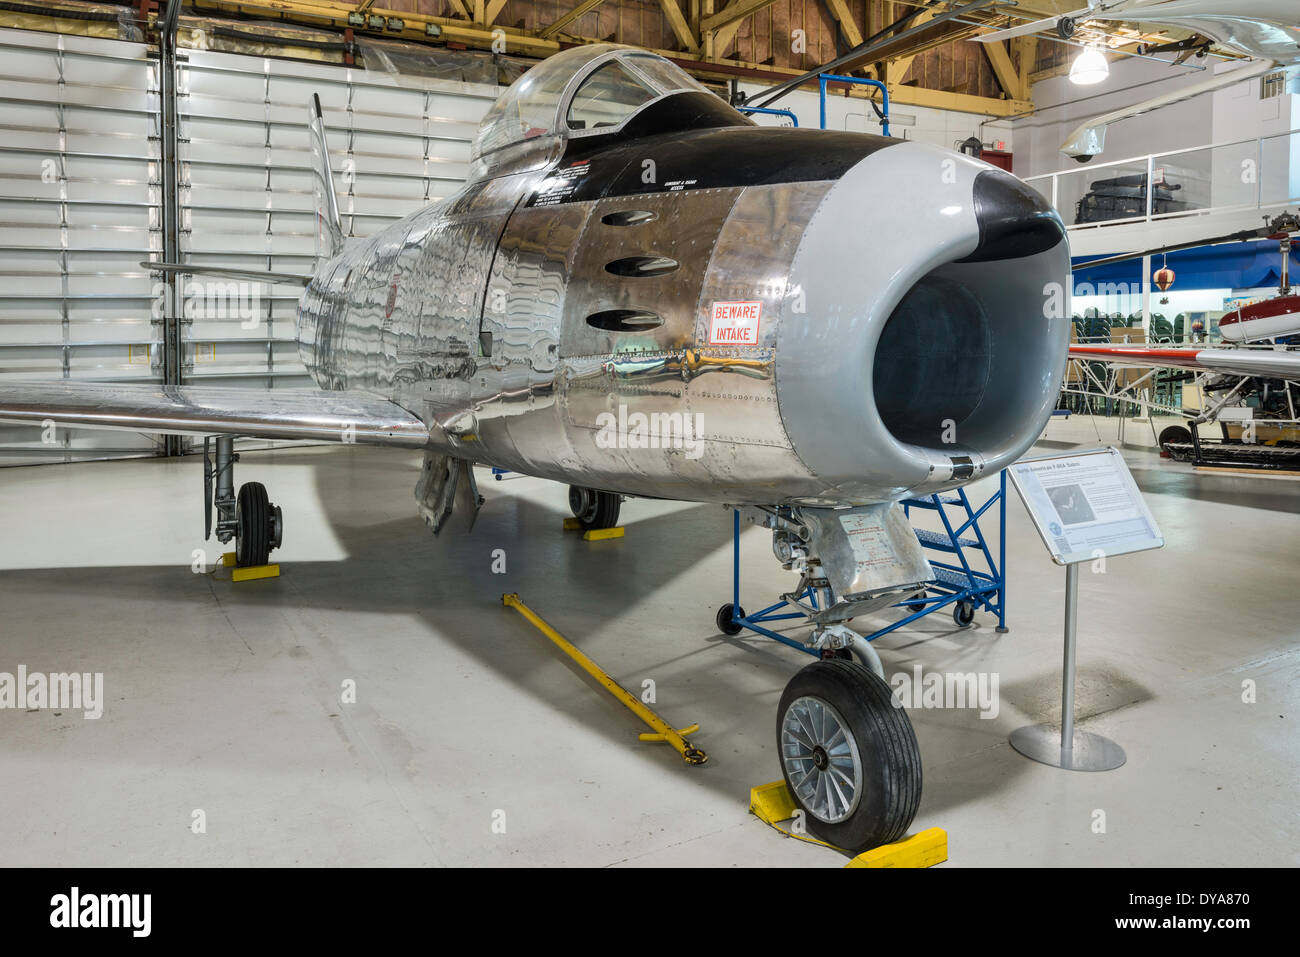 North American F-86 Sabre jet fighter, Hangar principal à Aero Space Museum of Calgary, Calgary, Alberta, Canada Banque D'Images